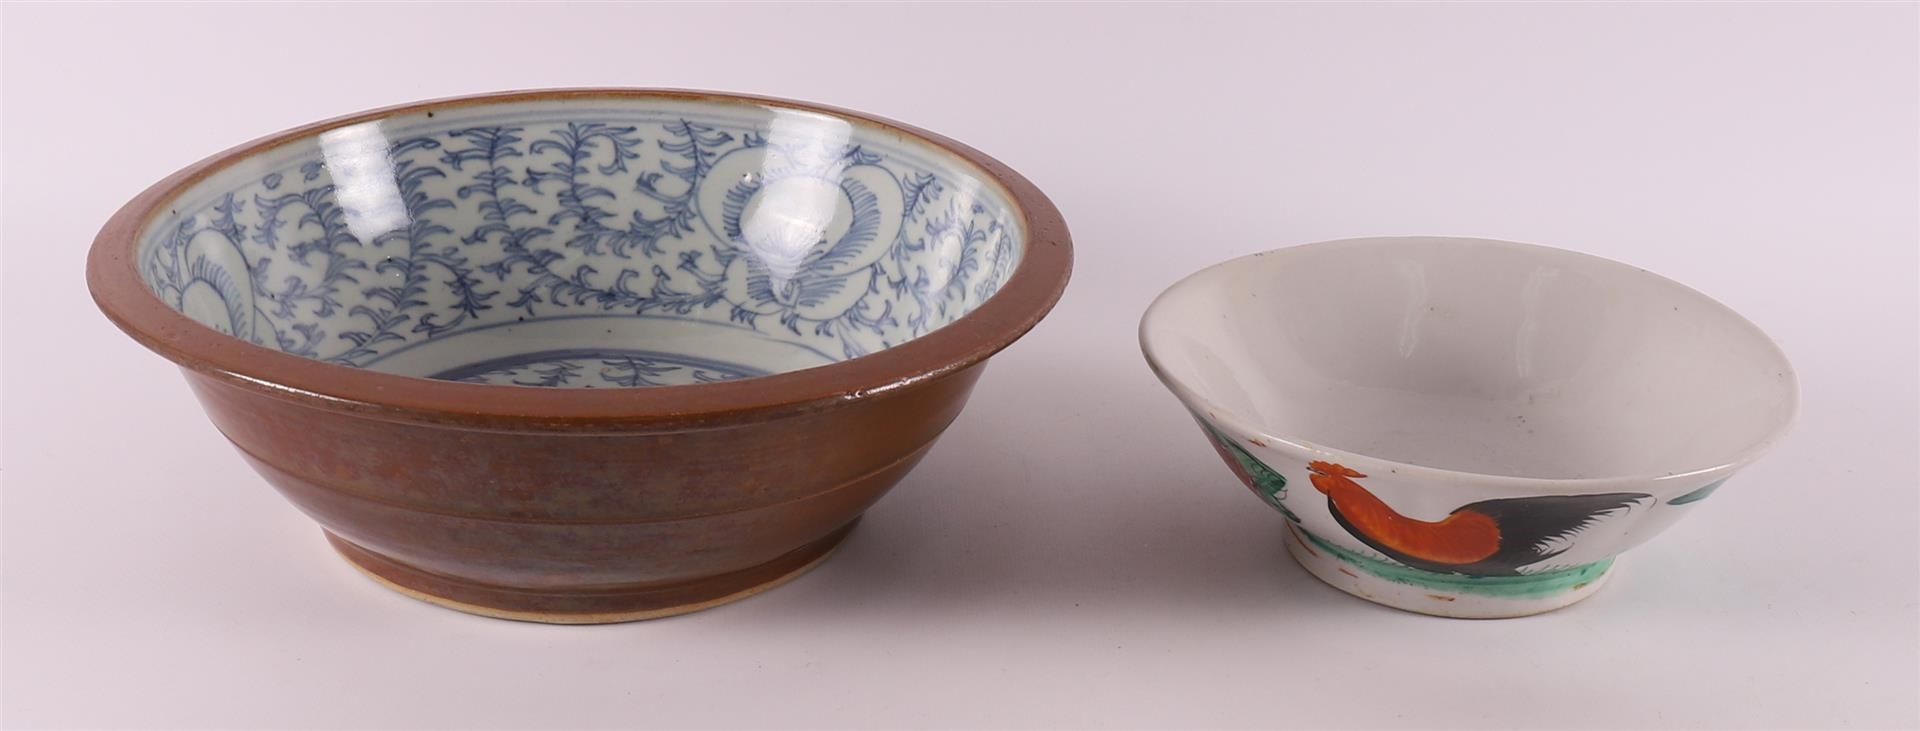 A blue/white and capucine porcelain bowl, China around 1900.